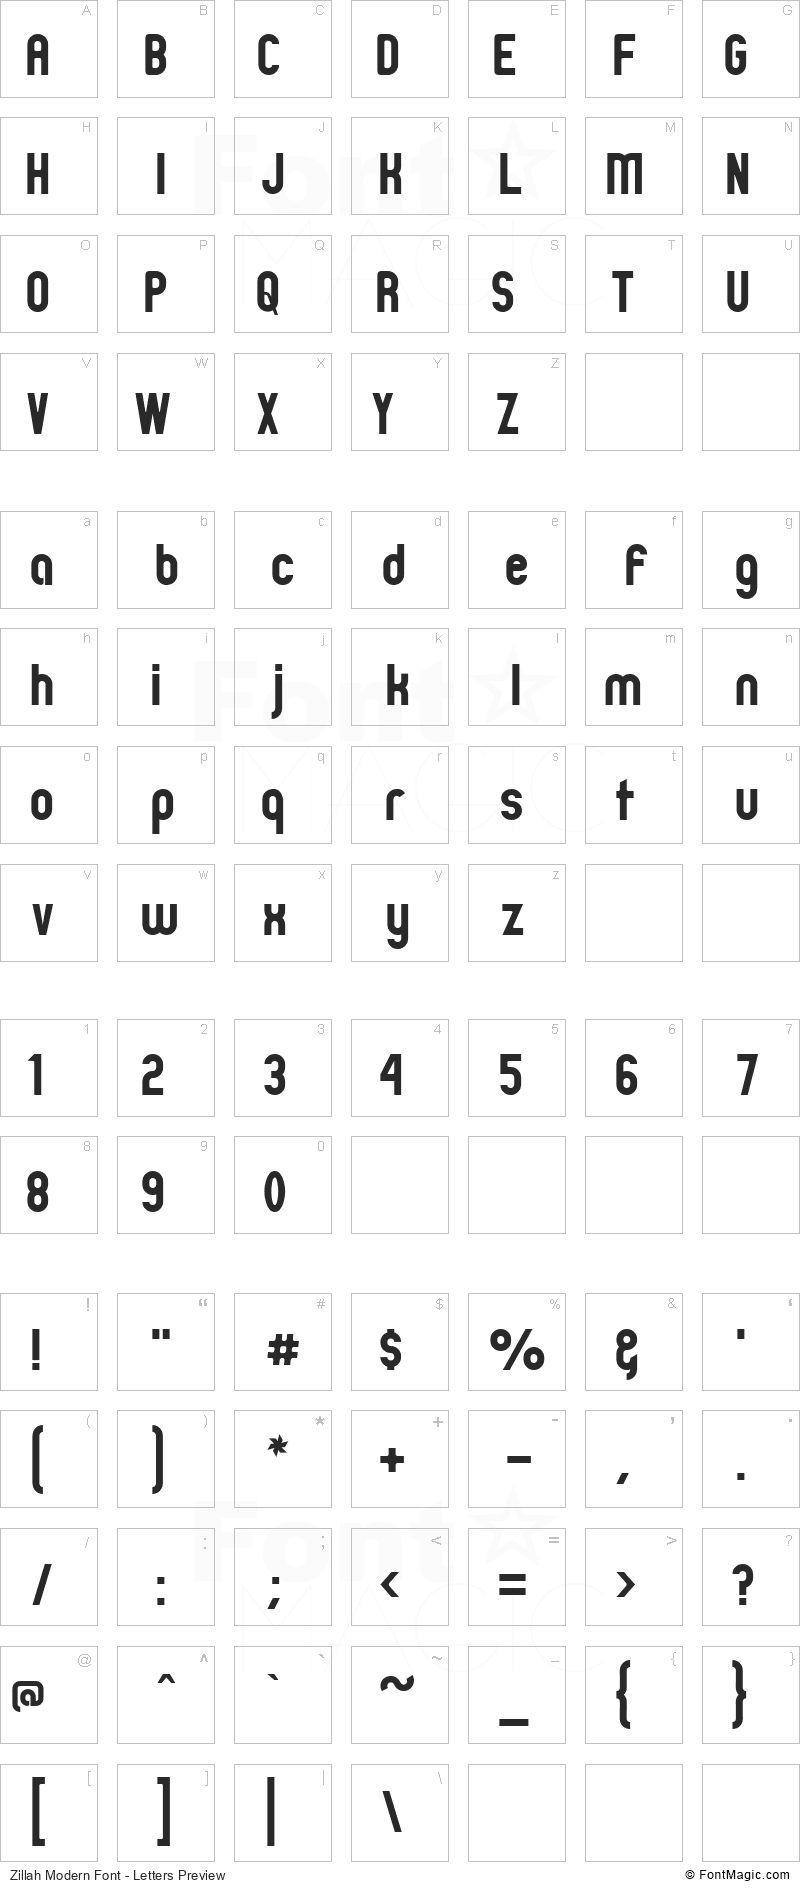 Zillah Modern Font - All Latters Preview Chart